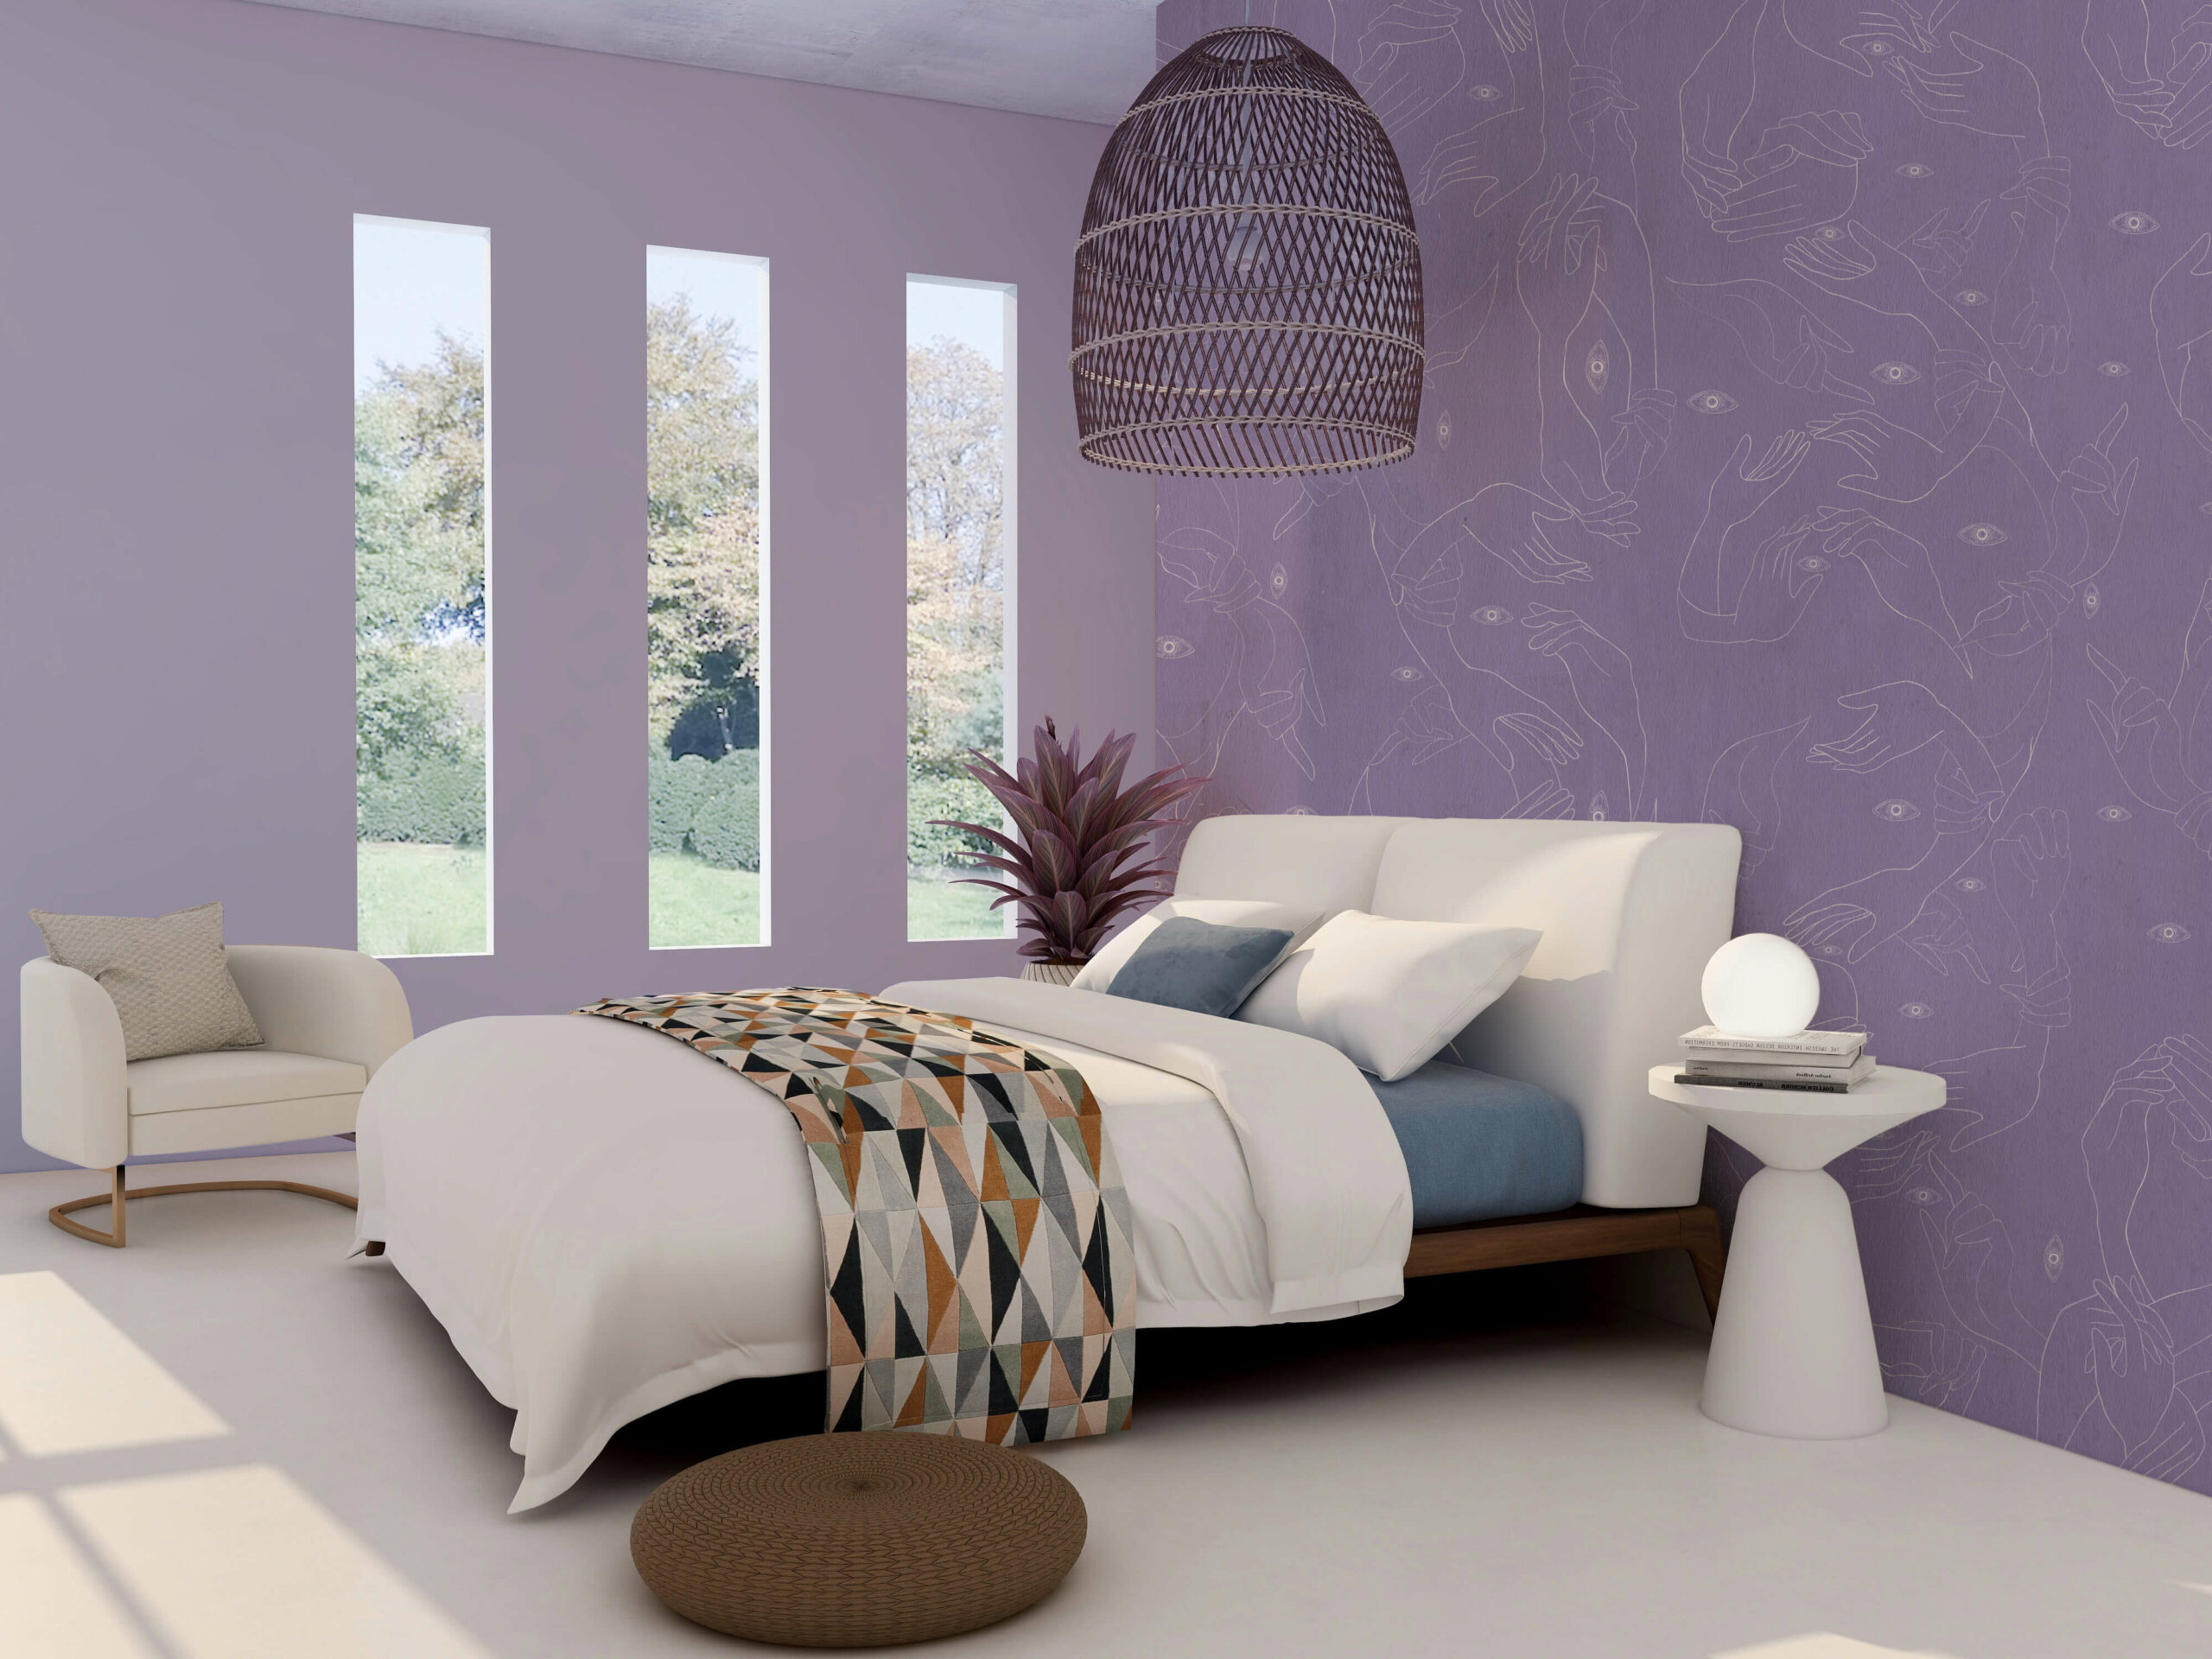 Wallpaper-Uno-Nessuno-Digital-Lavender-MaVoix-essential-line-master-bedroom-interior-design